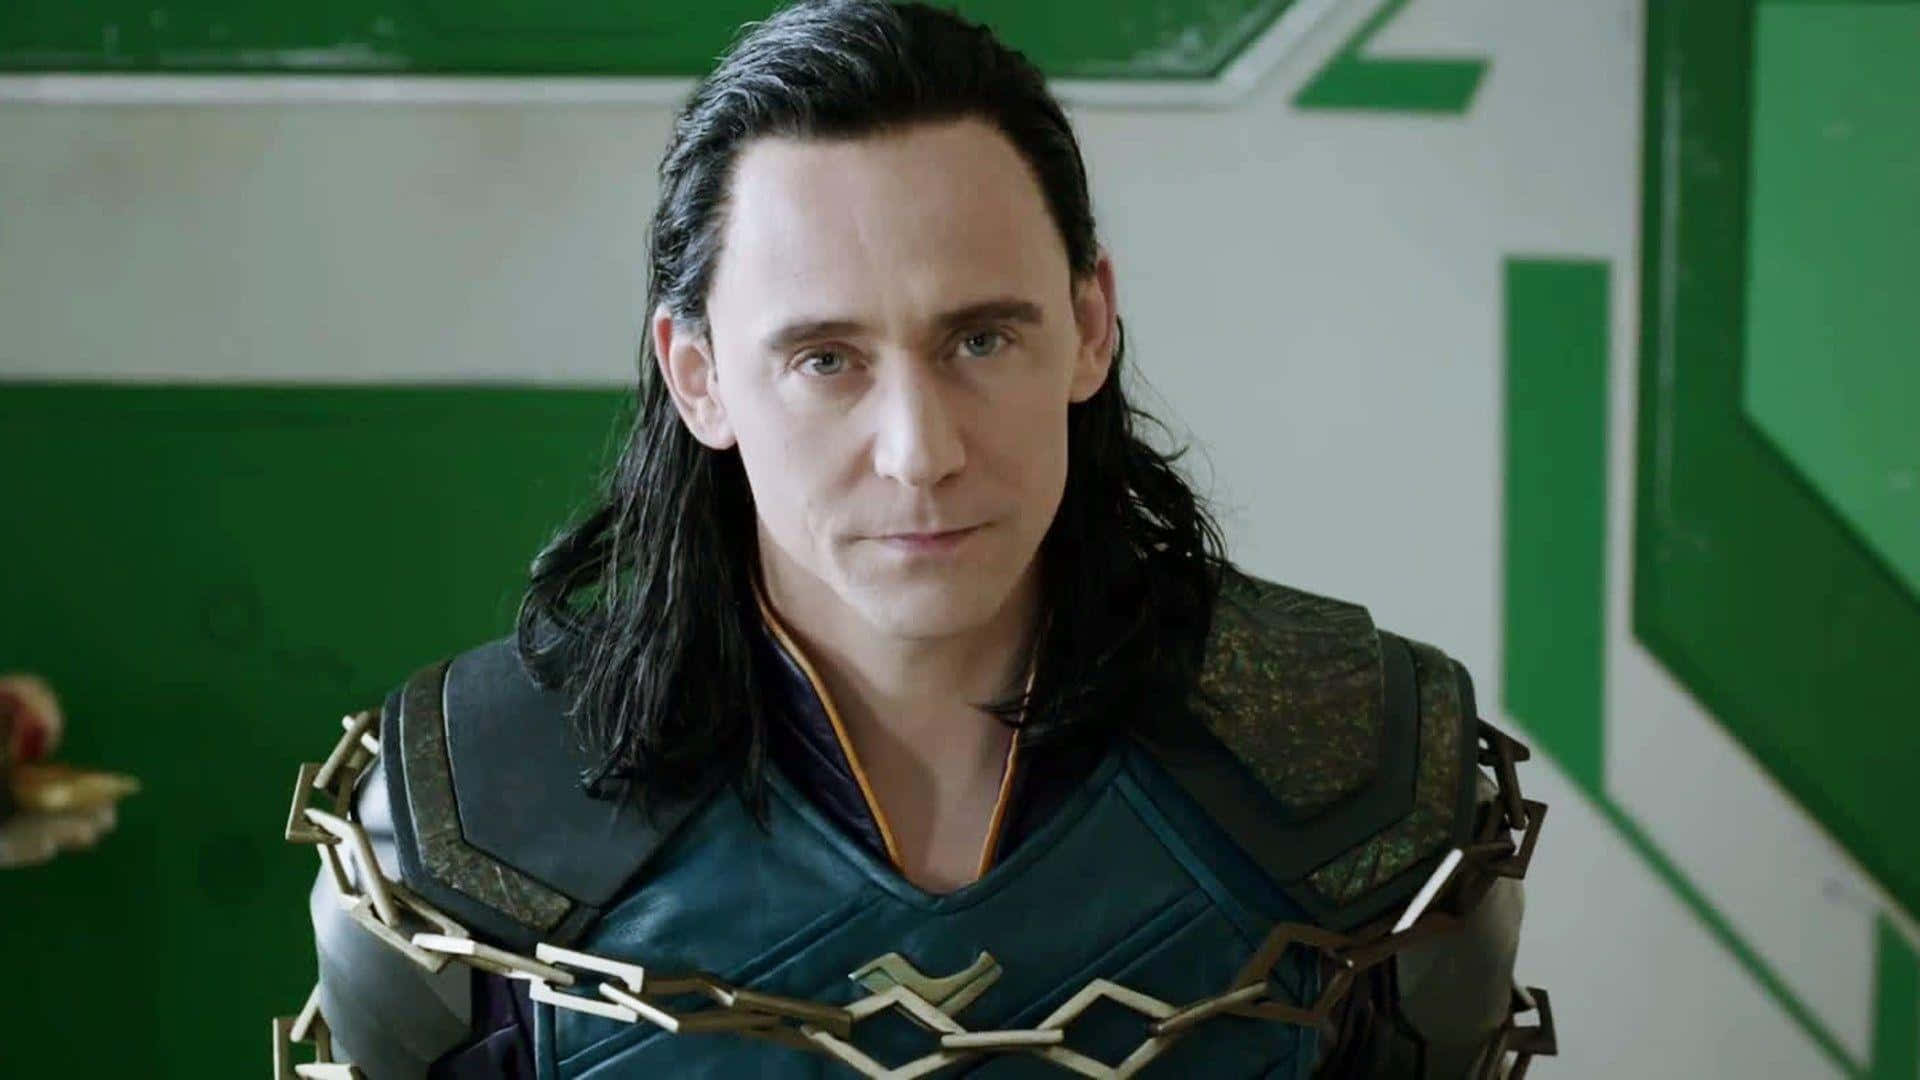 The God of Mischief, Loki, in action.